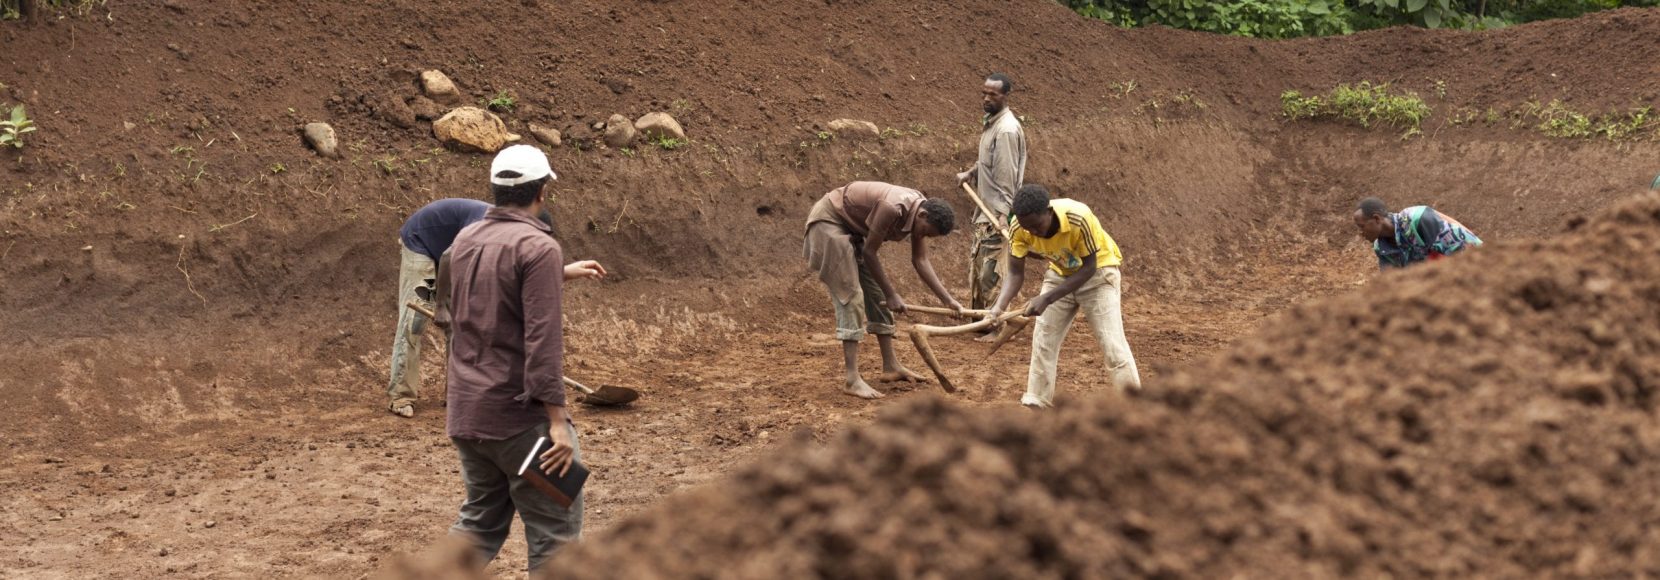 Coffee farmers in Ethiopia